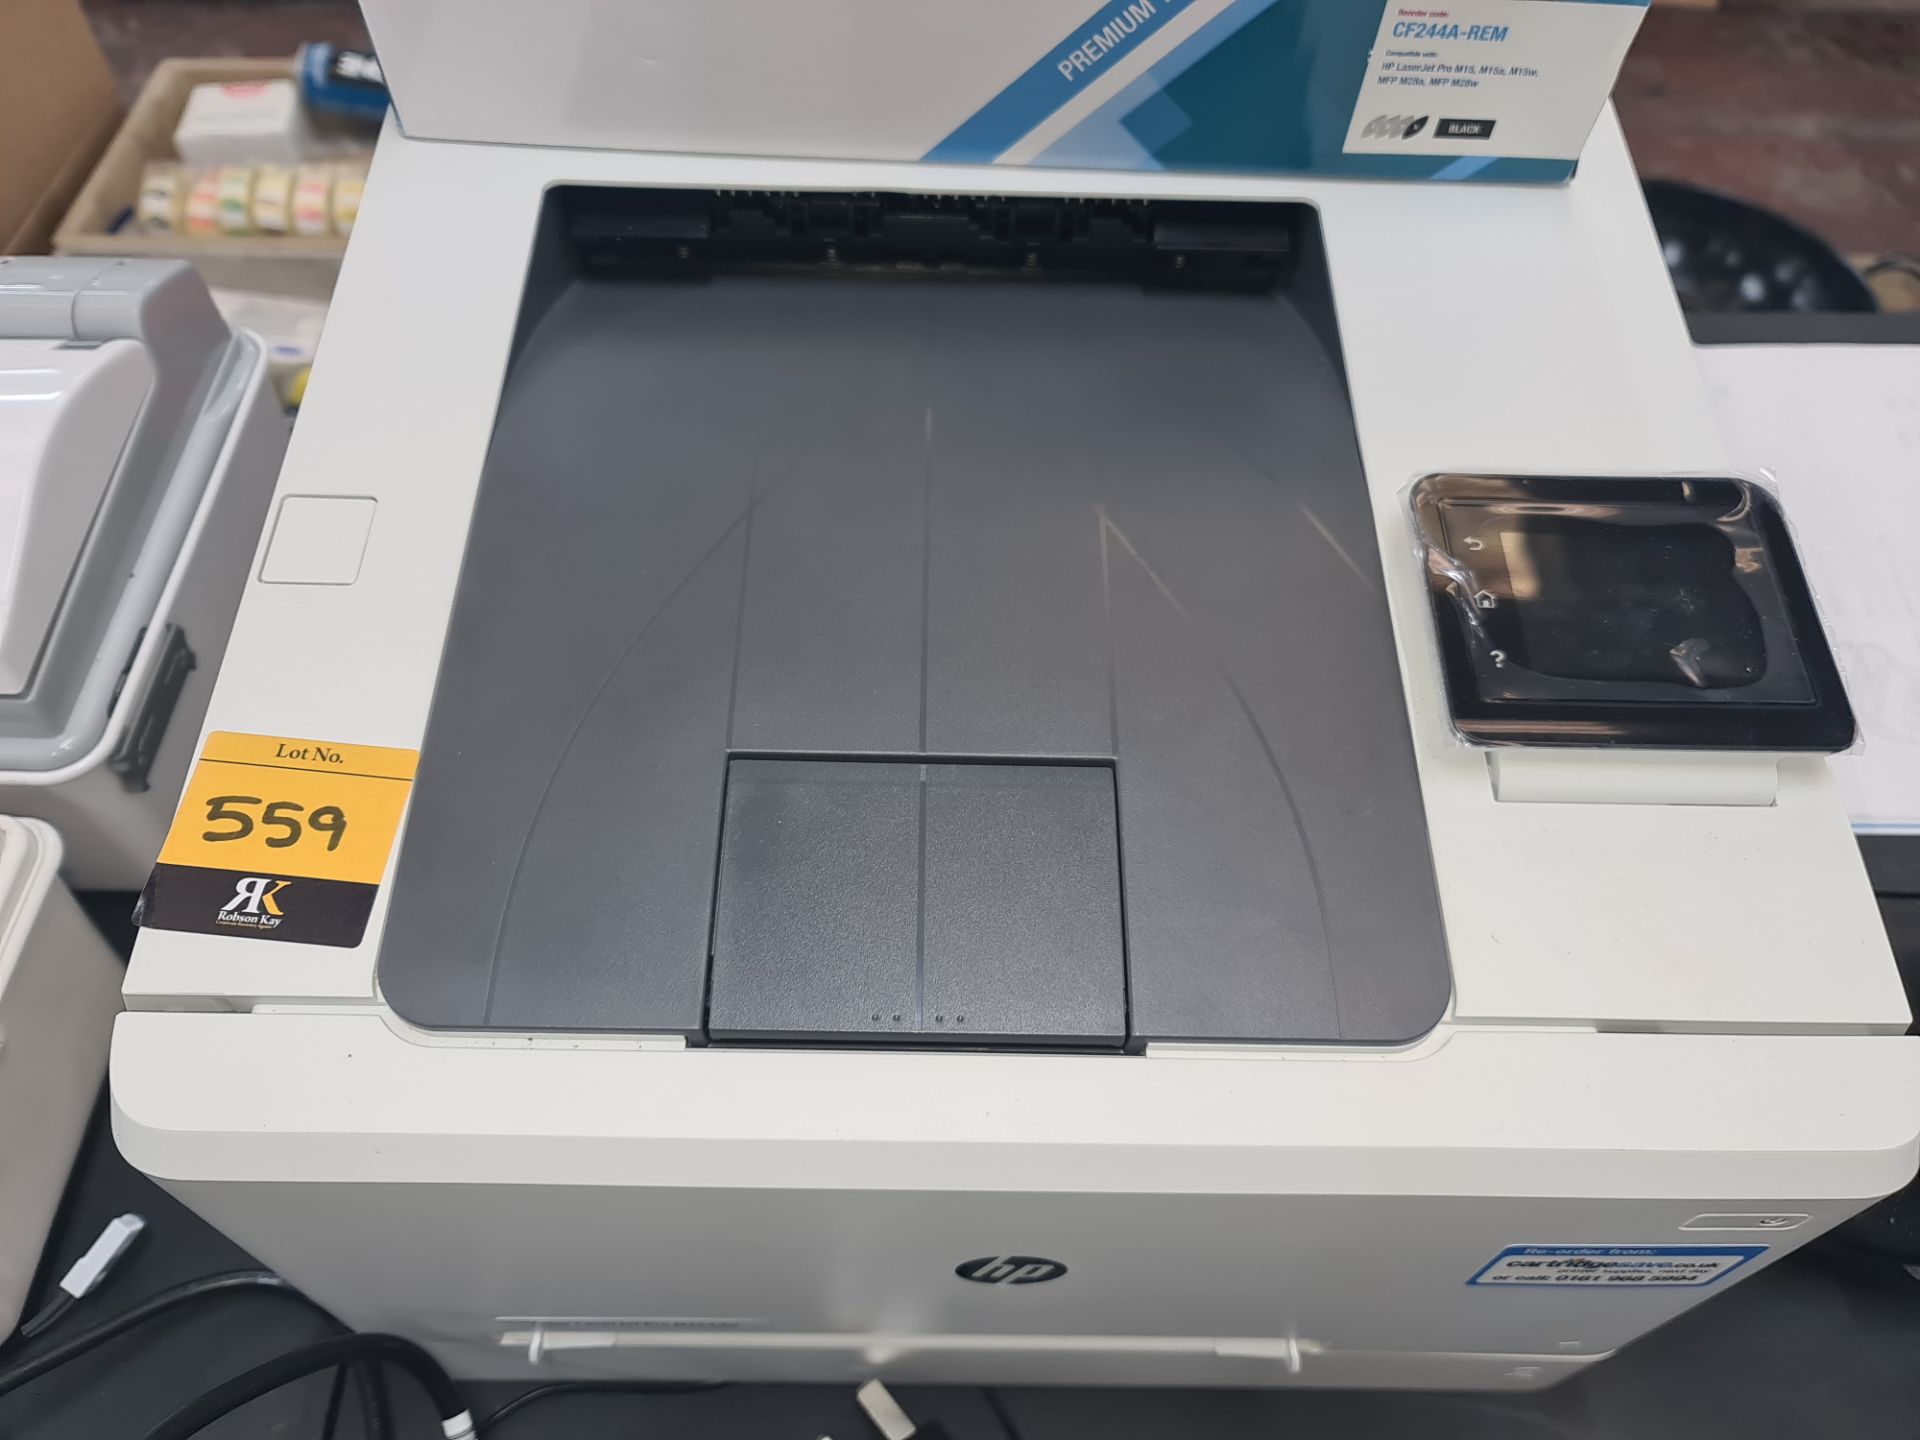 HP Color LaserJet Pro M254DW printer including box plus spare cartridge - Image 2 of 11